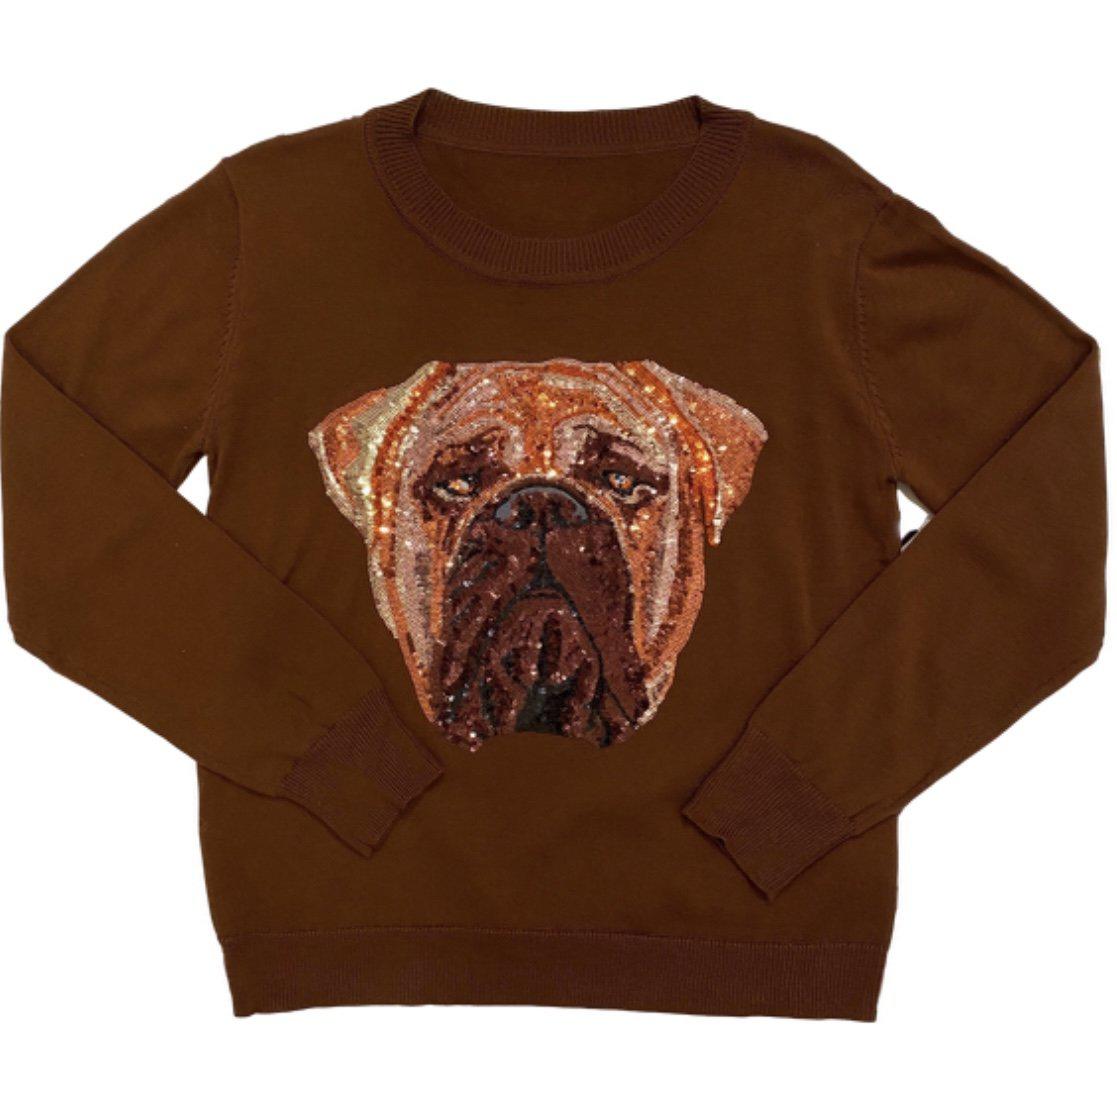 Bling Bullmastiff Sweater